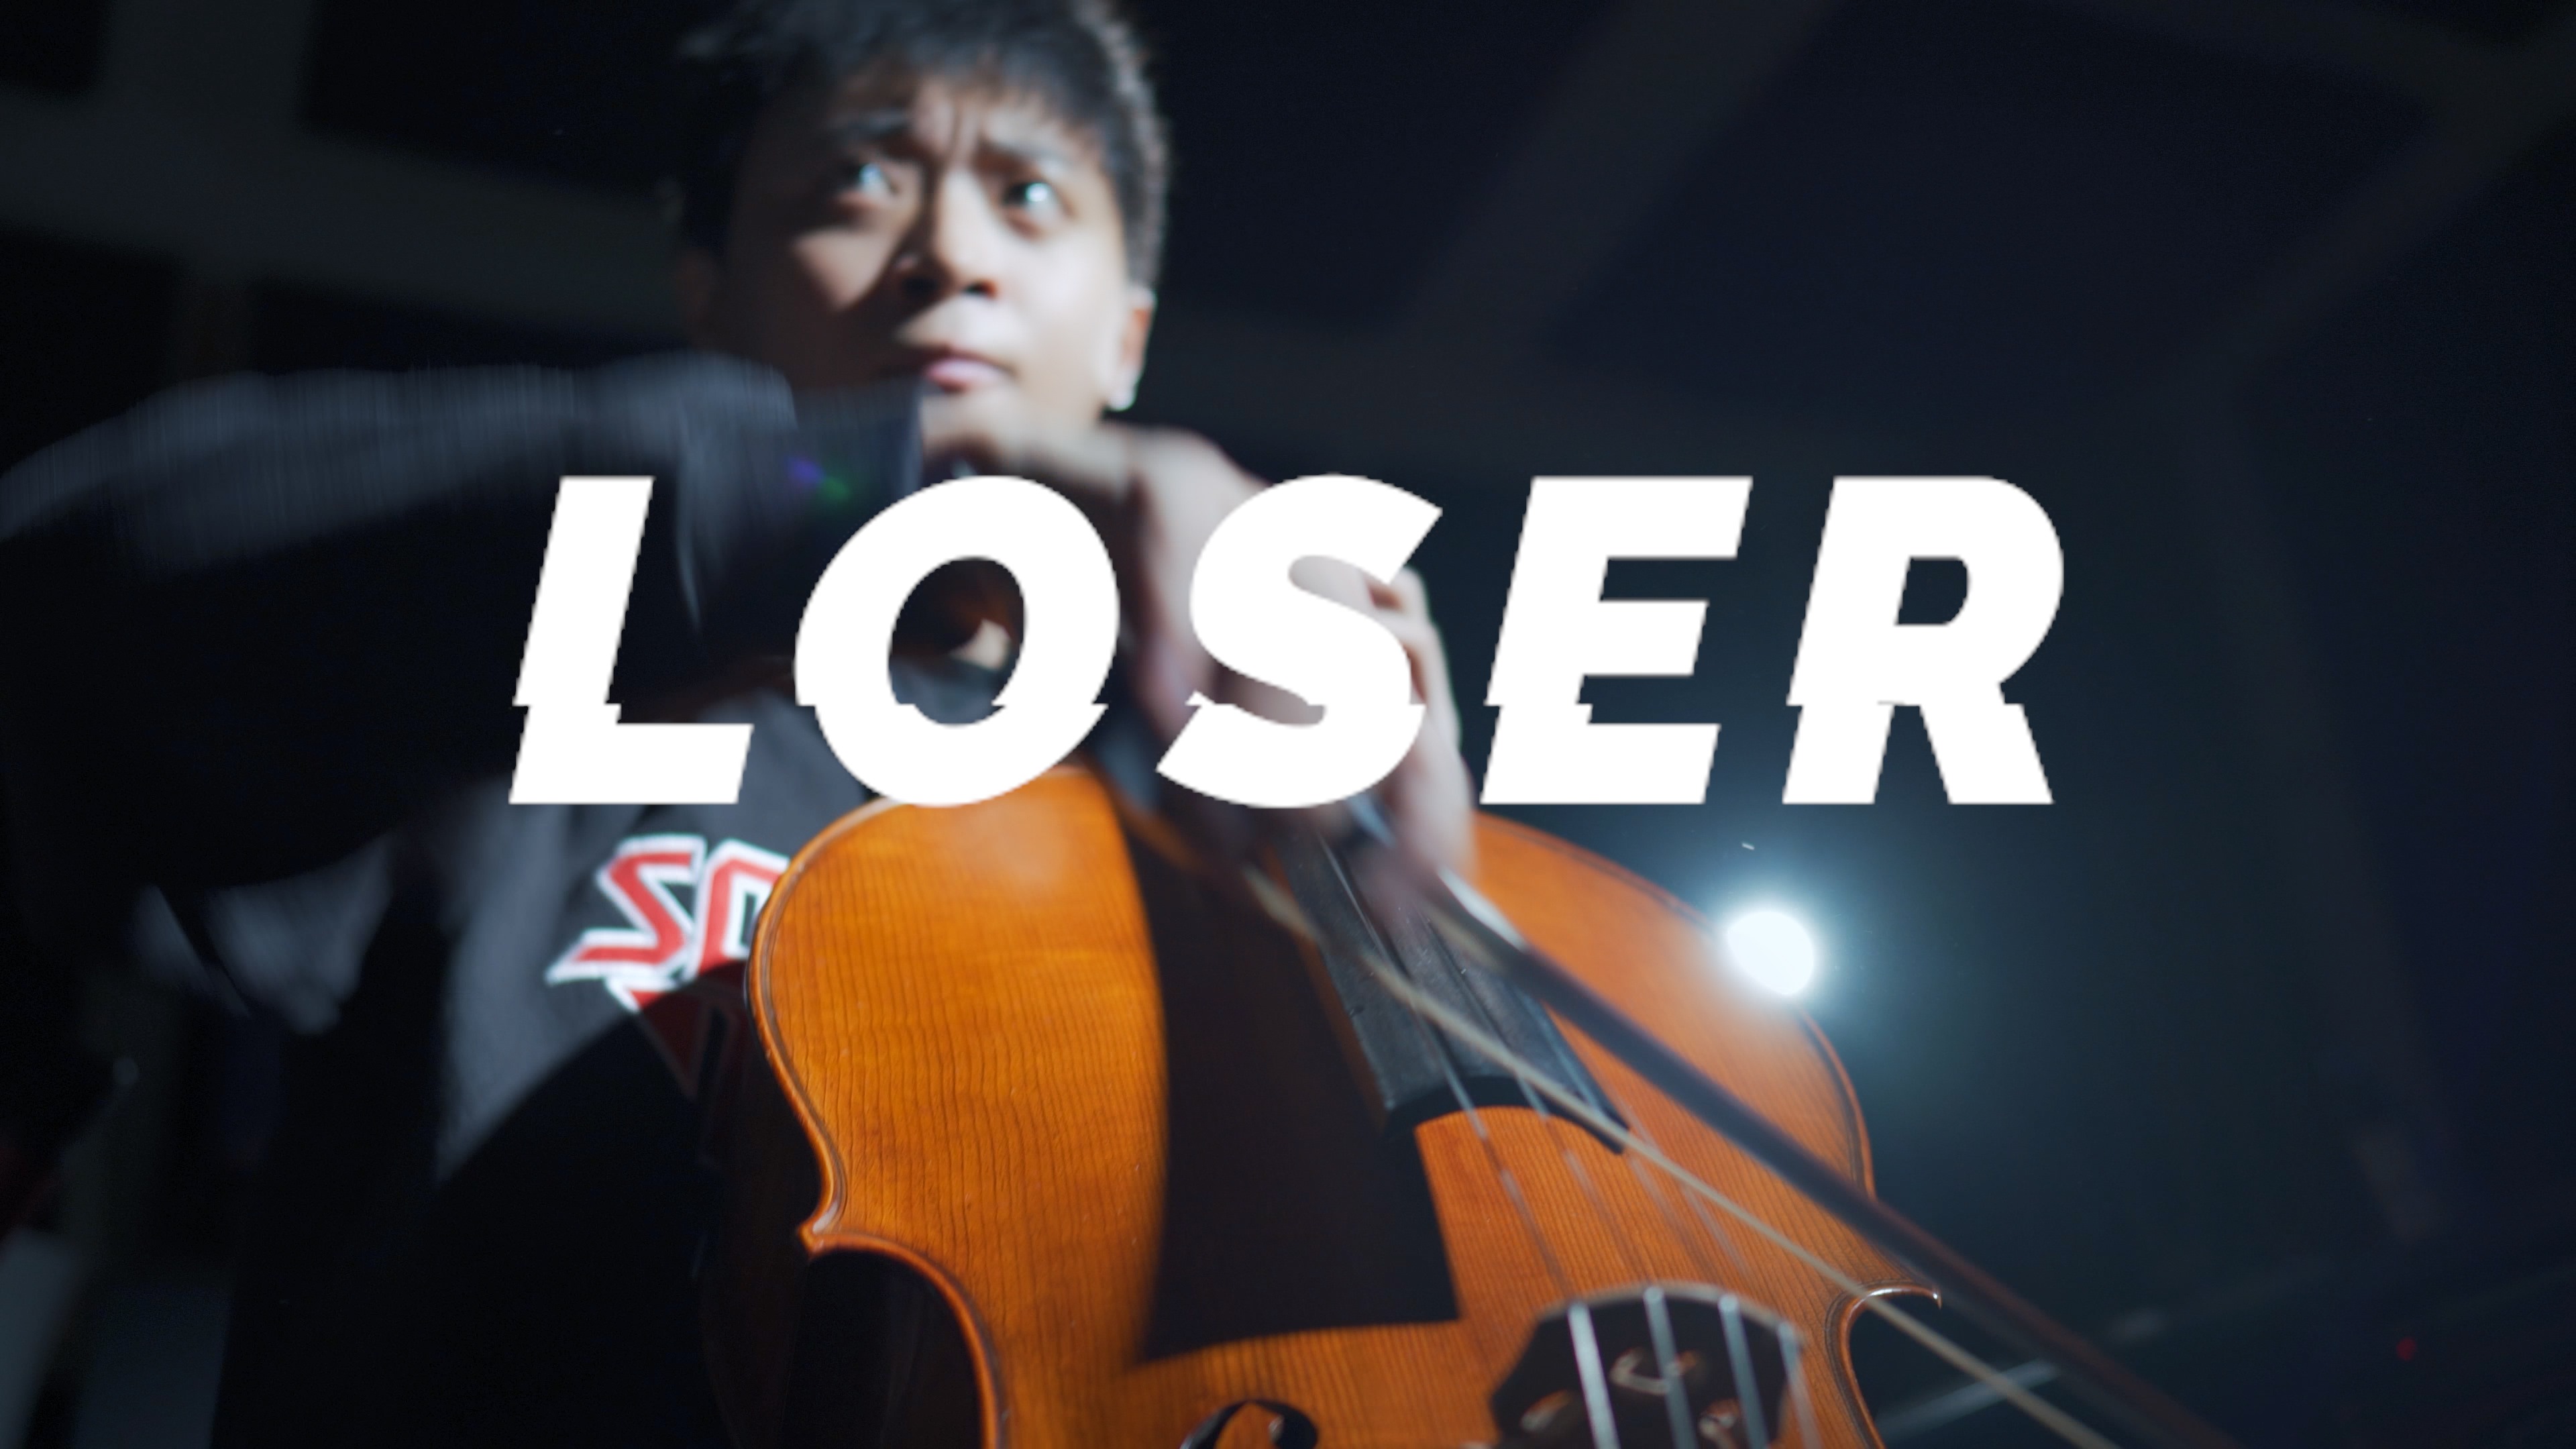 Loser 米津玄師よねづけんし cello cover 大提琴版本 『cover by YoYo Cello』